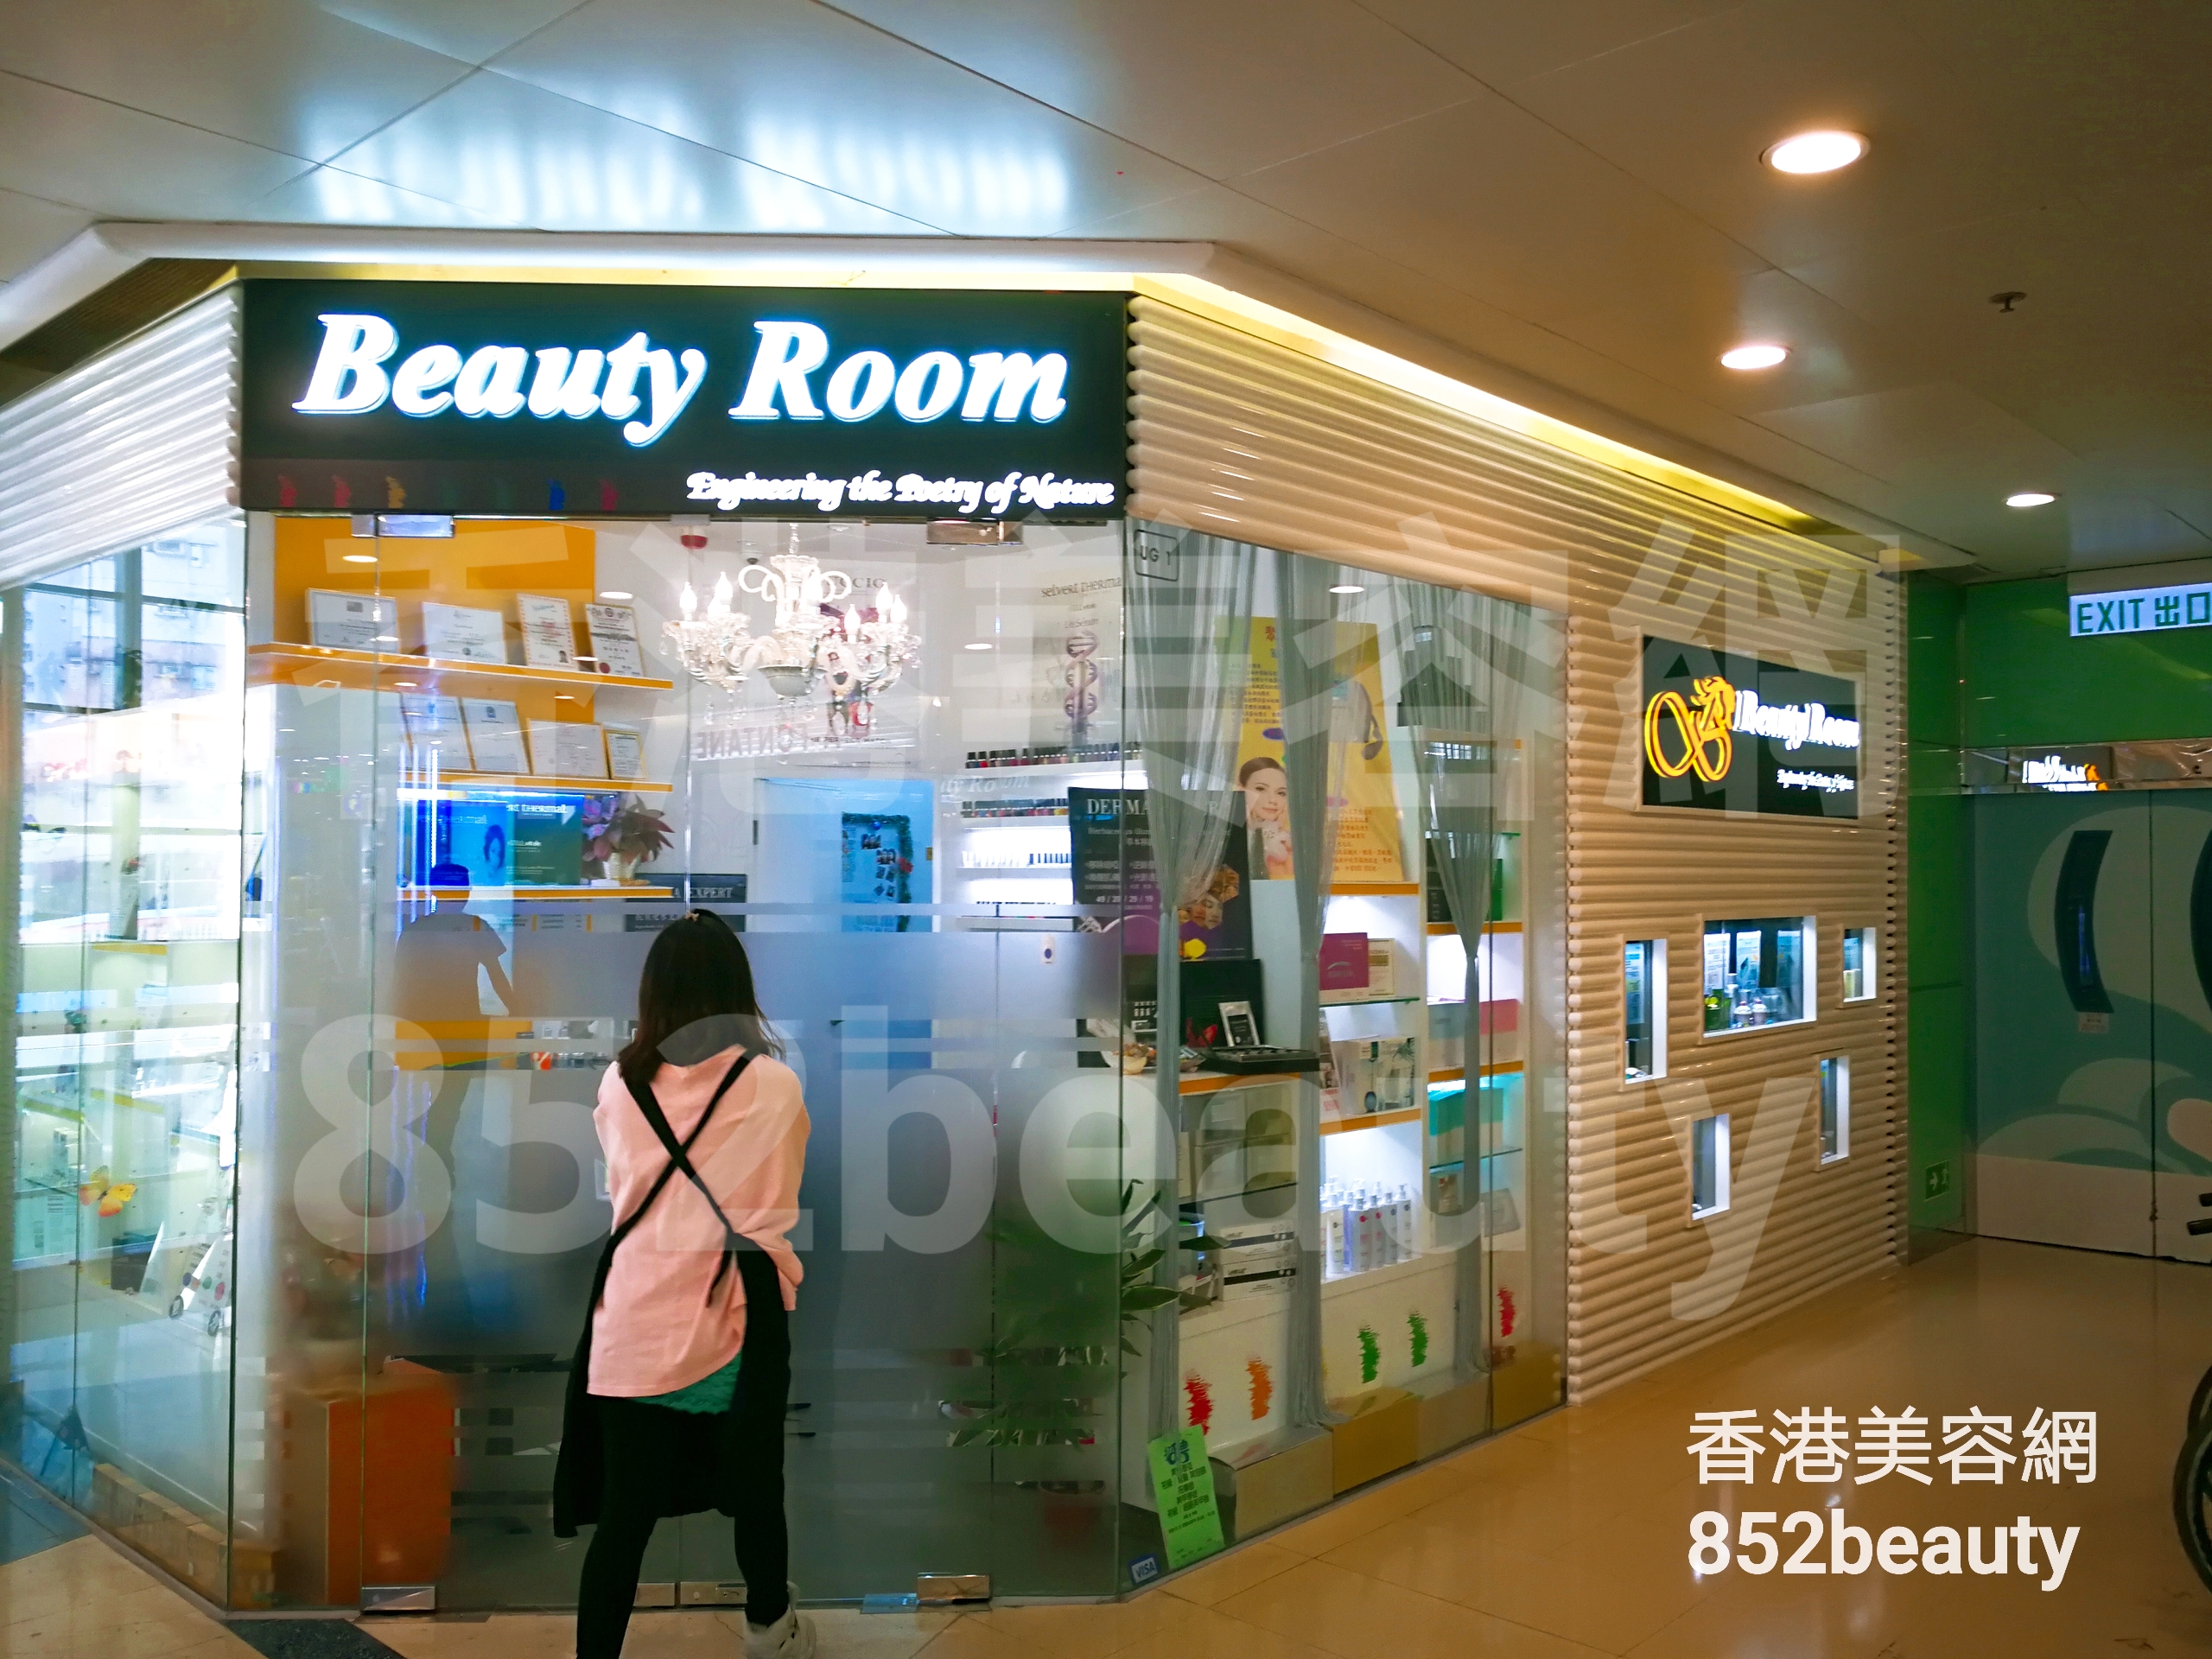 美容院 / 美容师: Beauty Room